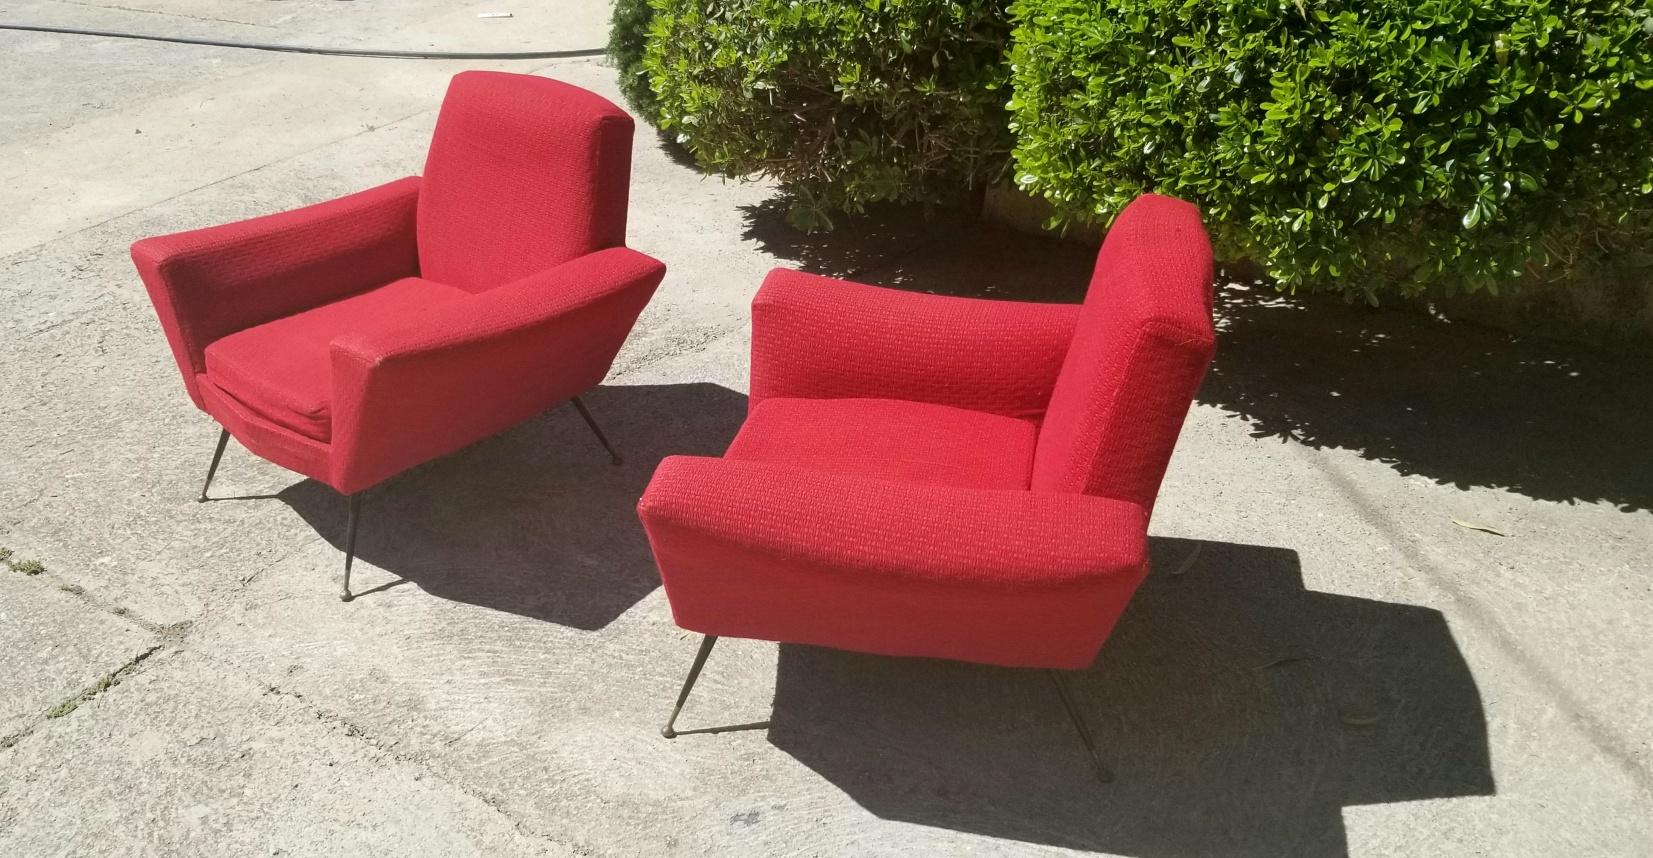 Pair of Italian chairs original condition M538 by Studio APA for Lenzi Italy.